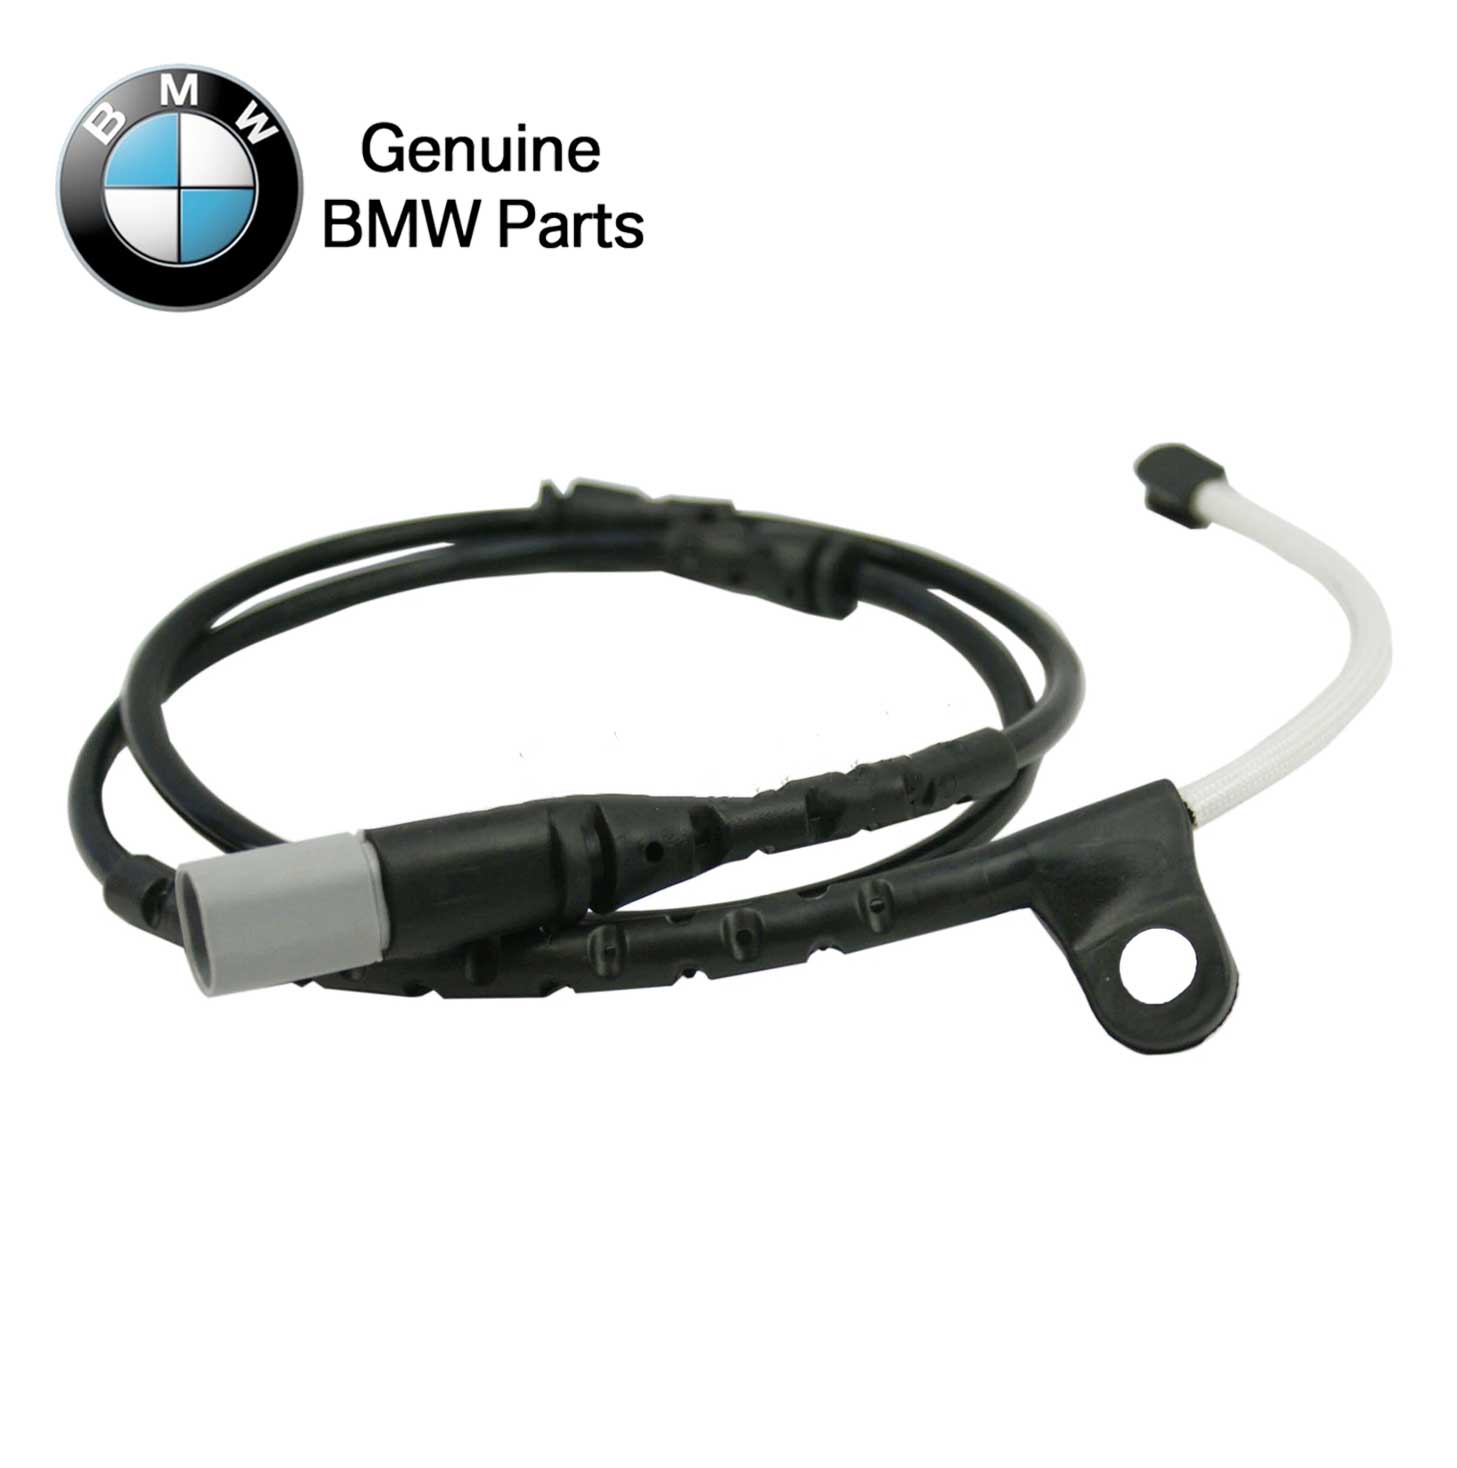 BMW Genuine SENSOR (Original Parts Without Sticker Level and Neutral Box) 34356860181